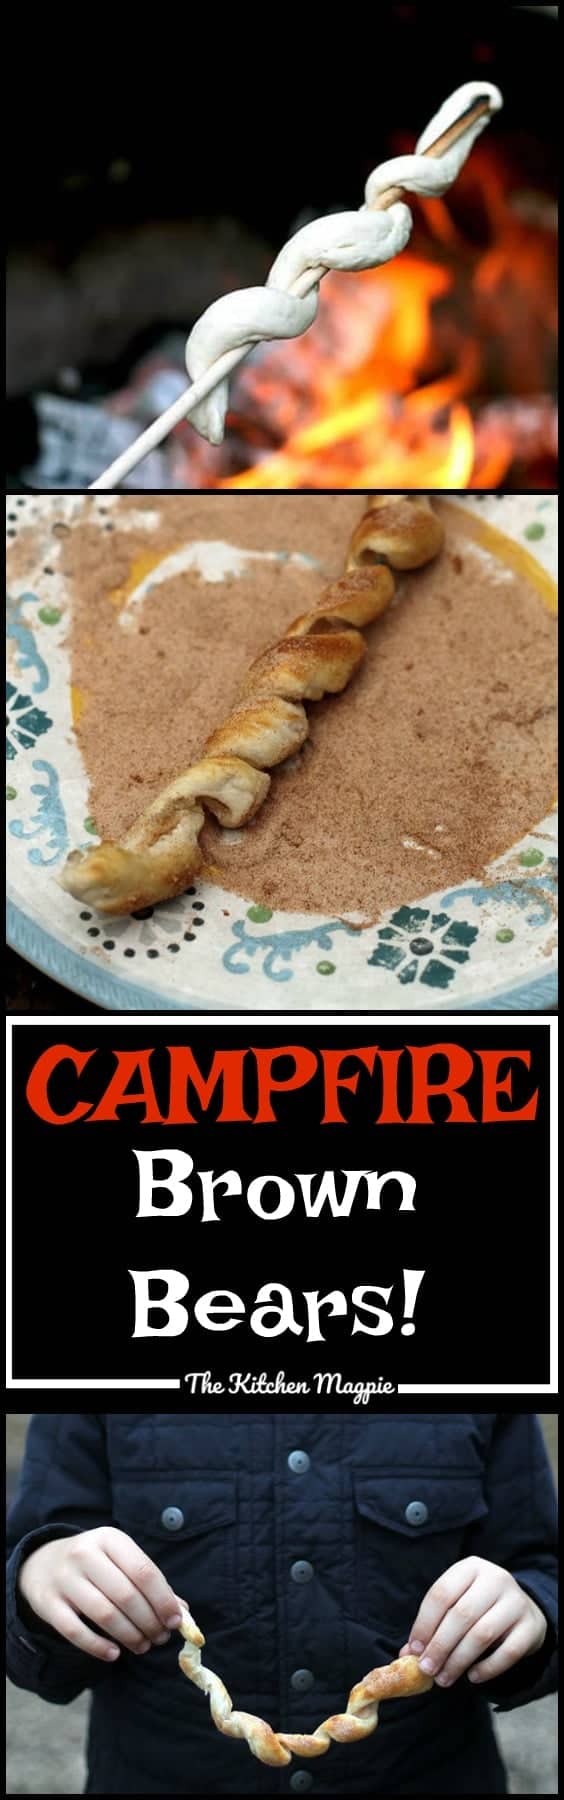 Campfire Brown Bears Recipe!